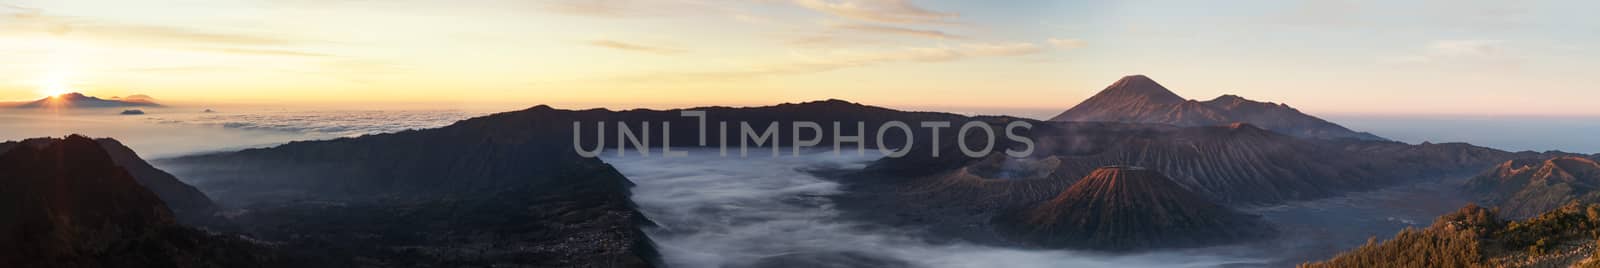 The sunrise of the Bromo volcano, Shot in Java, indunesia by vinkfan